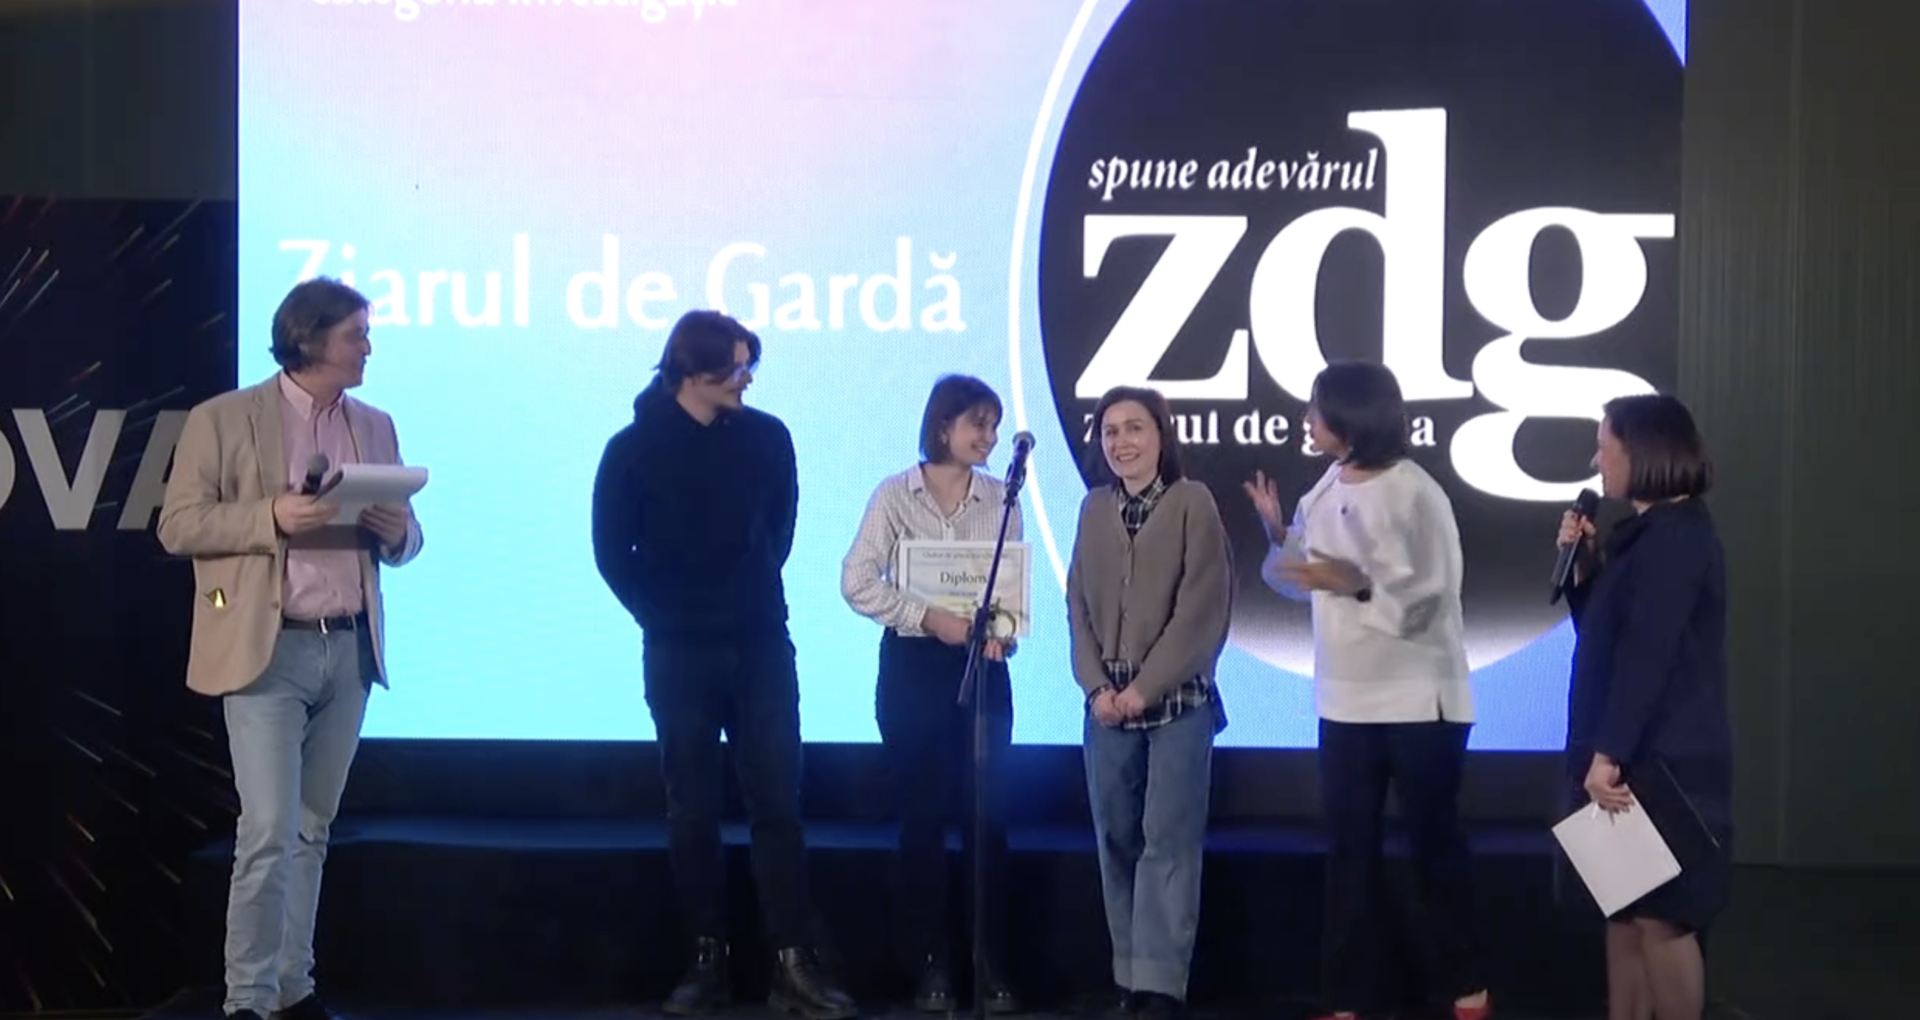 Ziarul de Gardă won two awards at the “Journalists of the Year 2022” Gala